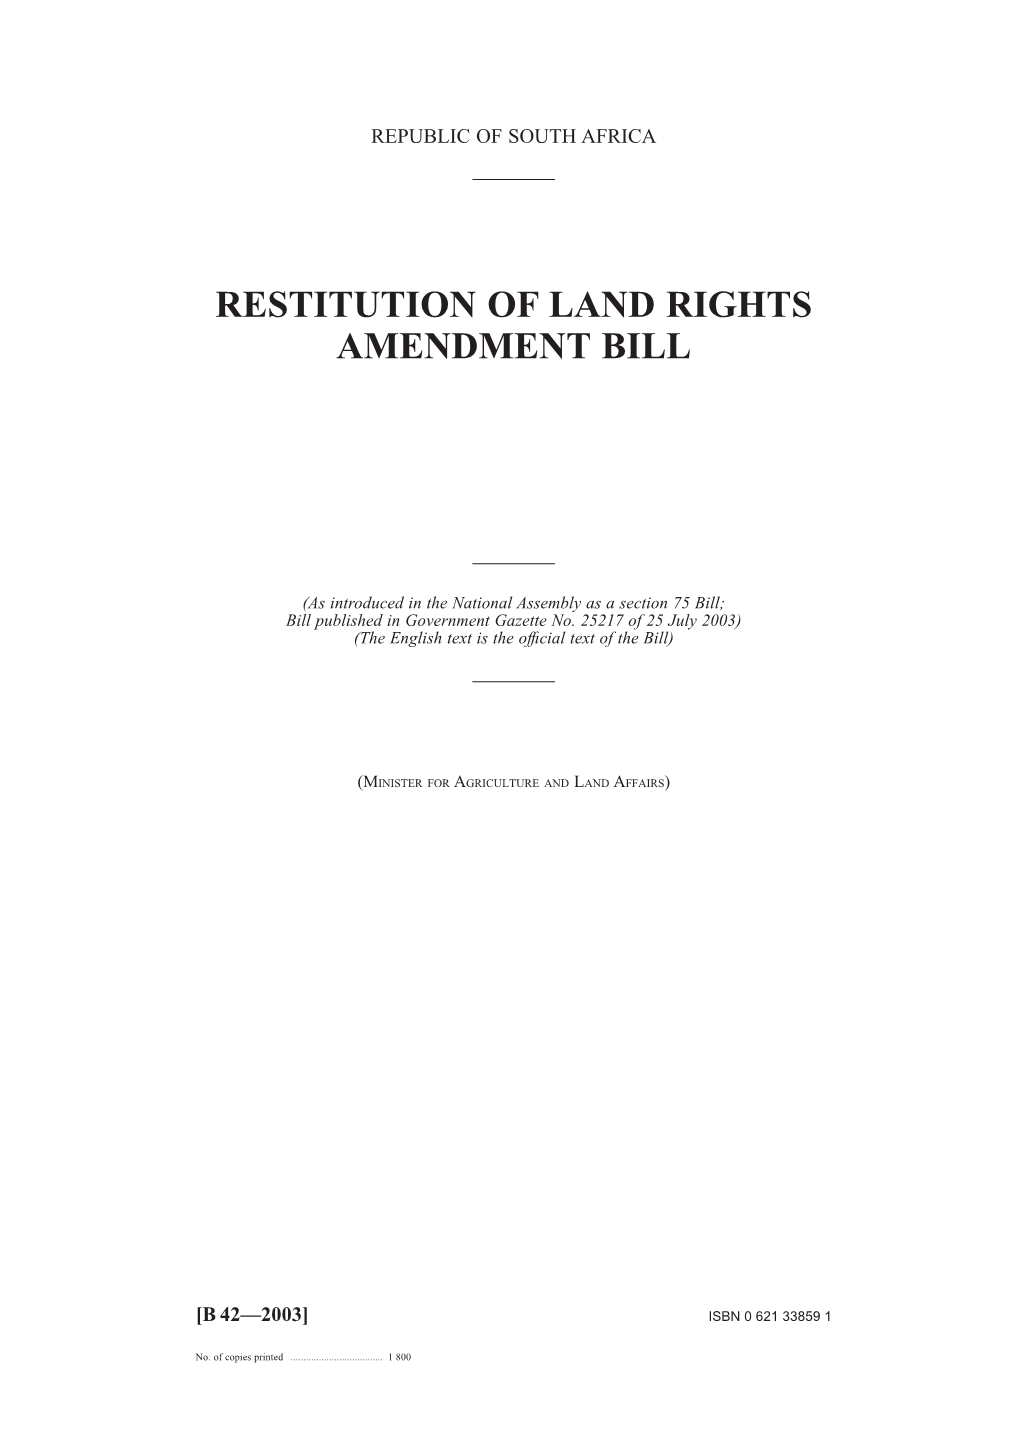 Restitution of Land Rights Amendment Bill